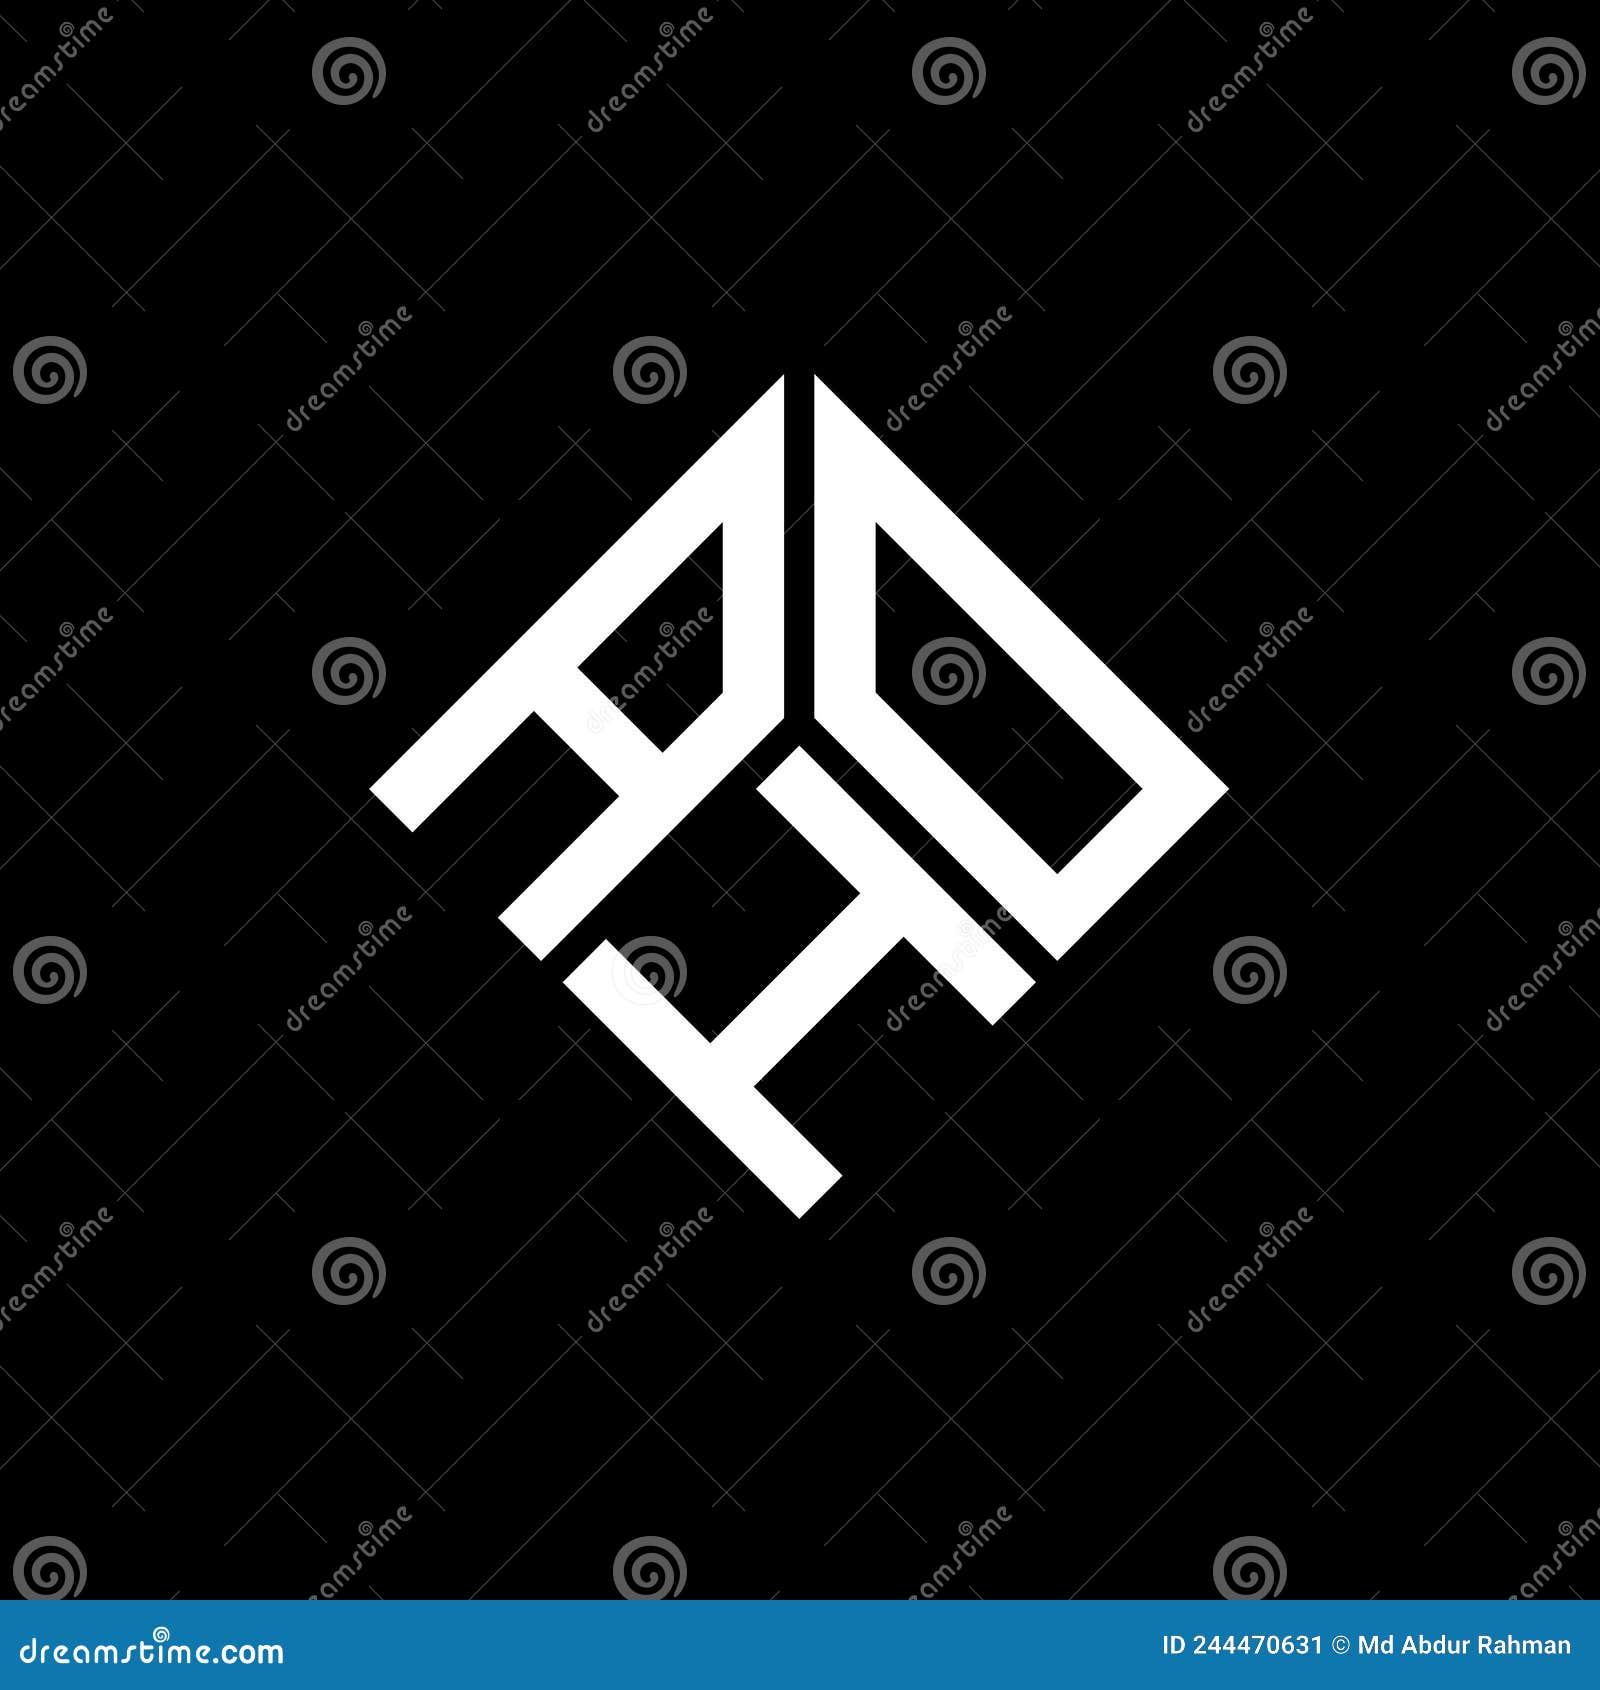 aho letter logo  on black background. aho creative initials letter logo concept. aho letter 